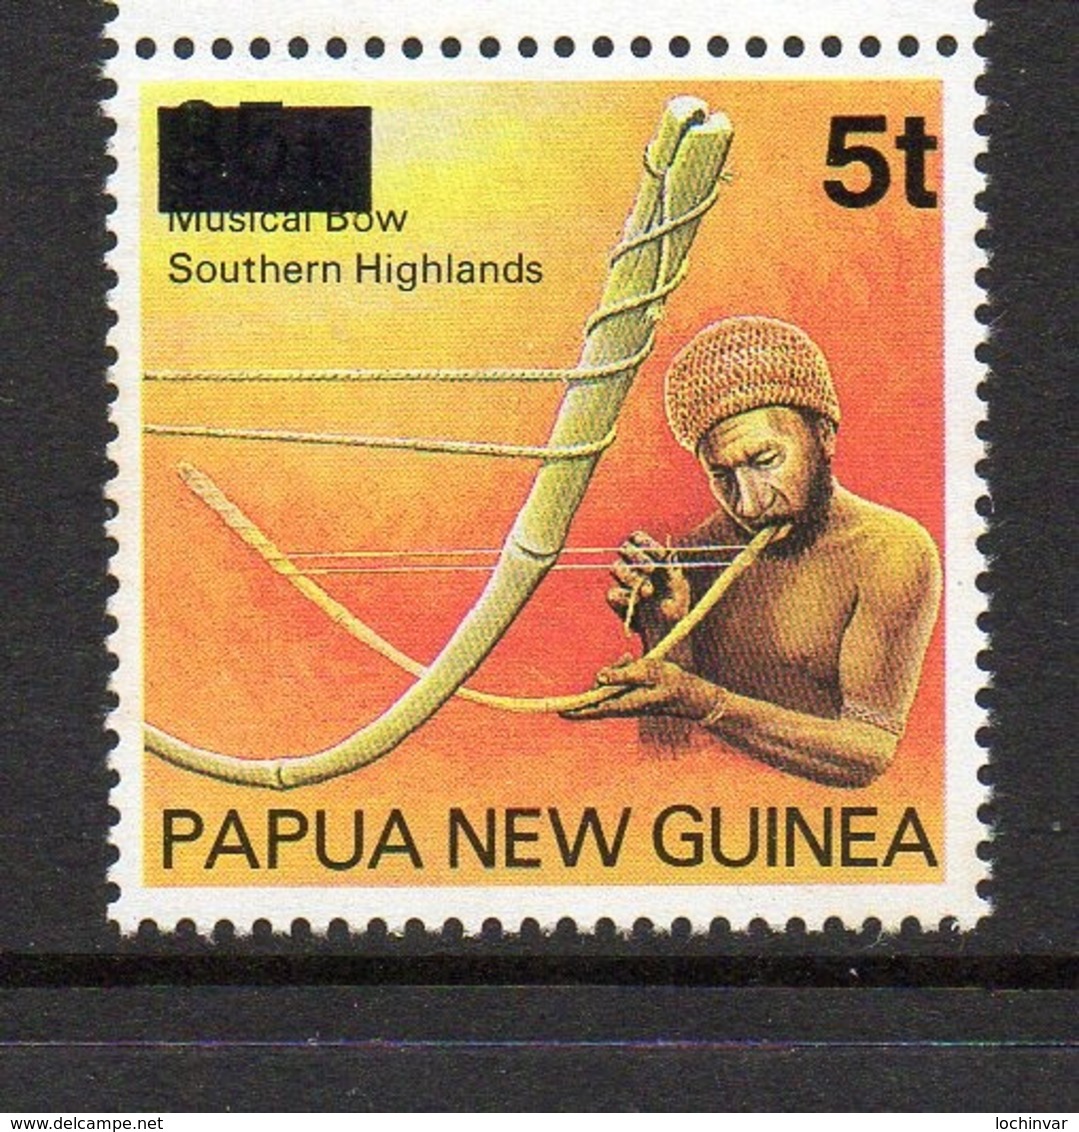 PAPUA NEW GUINEA, 1994 5t ON 35t OVERPRINT MUSICAL BOW MNH - Papua New Guinea